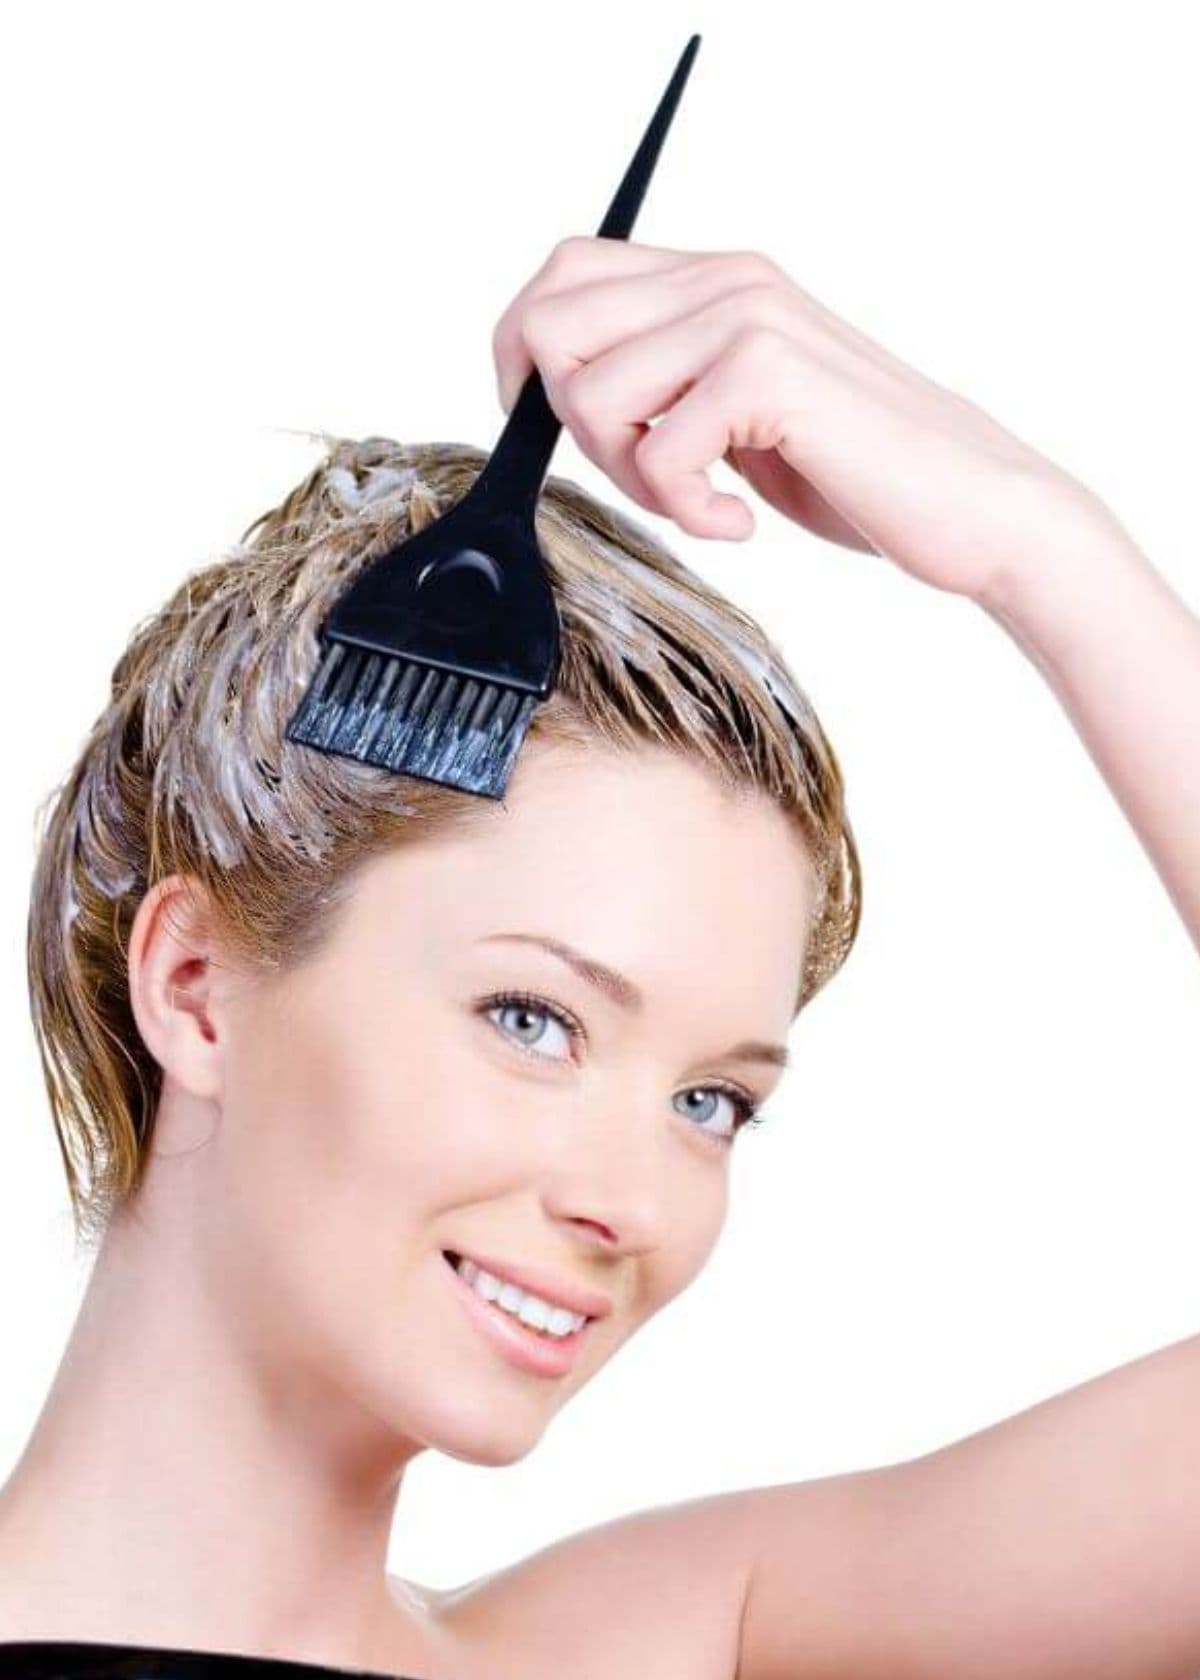 How does Hair Straightening Shampoo Work?